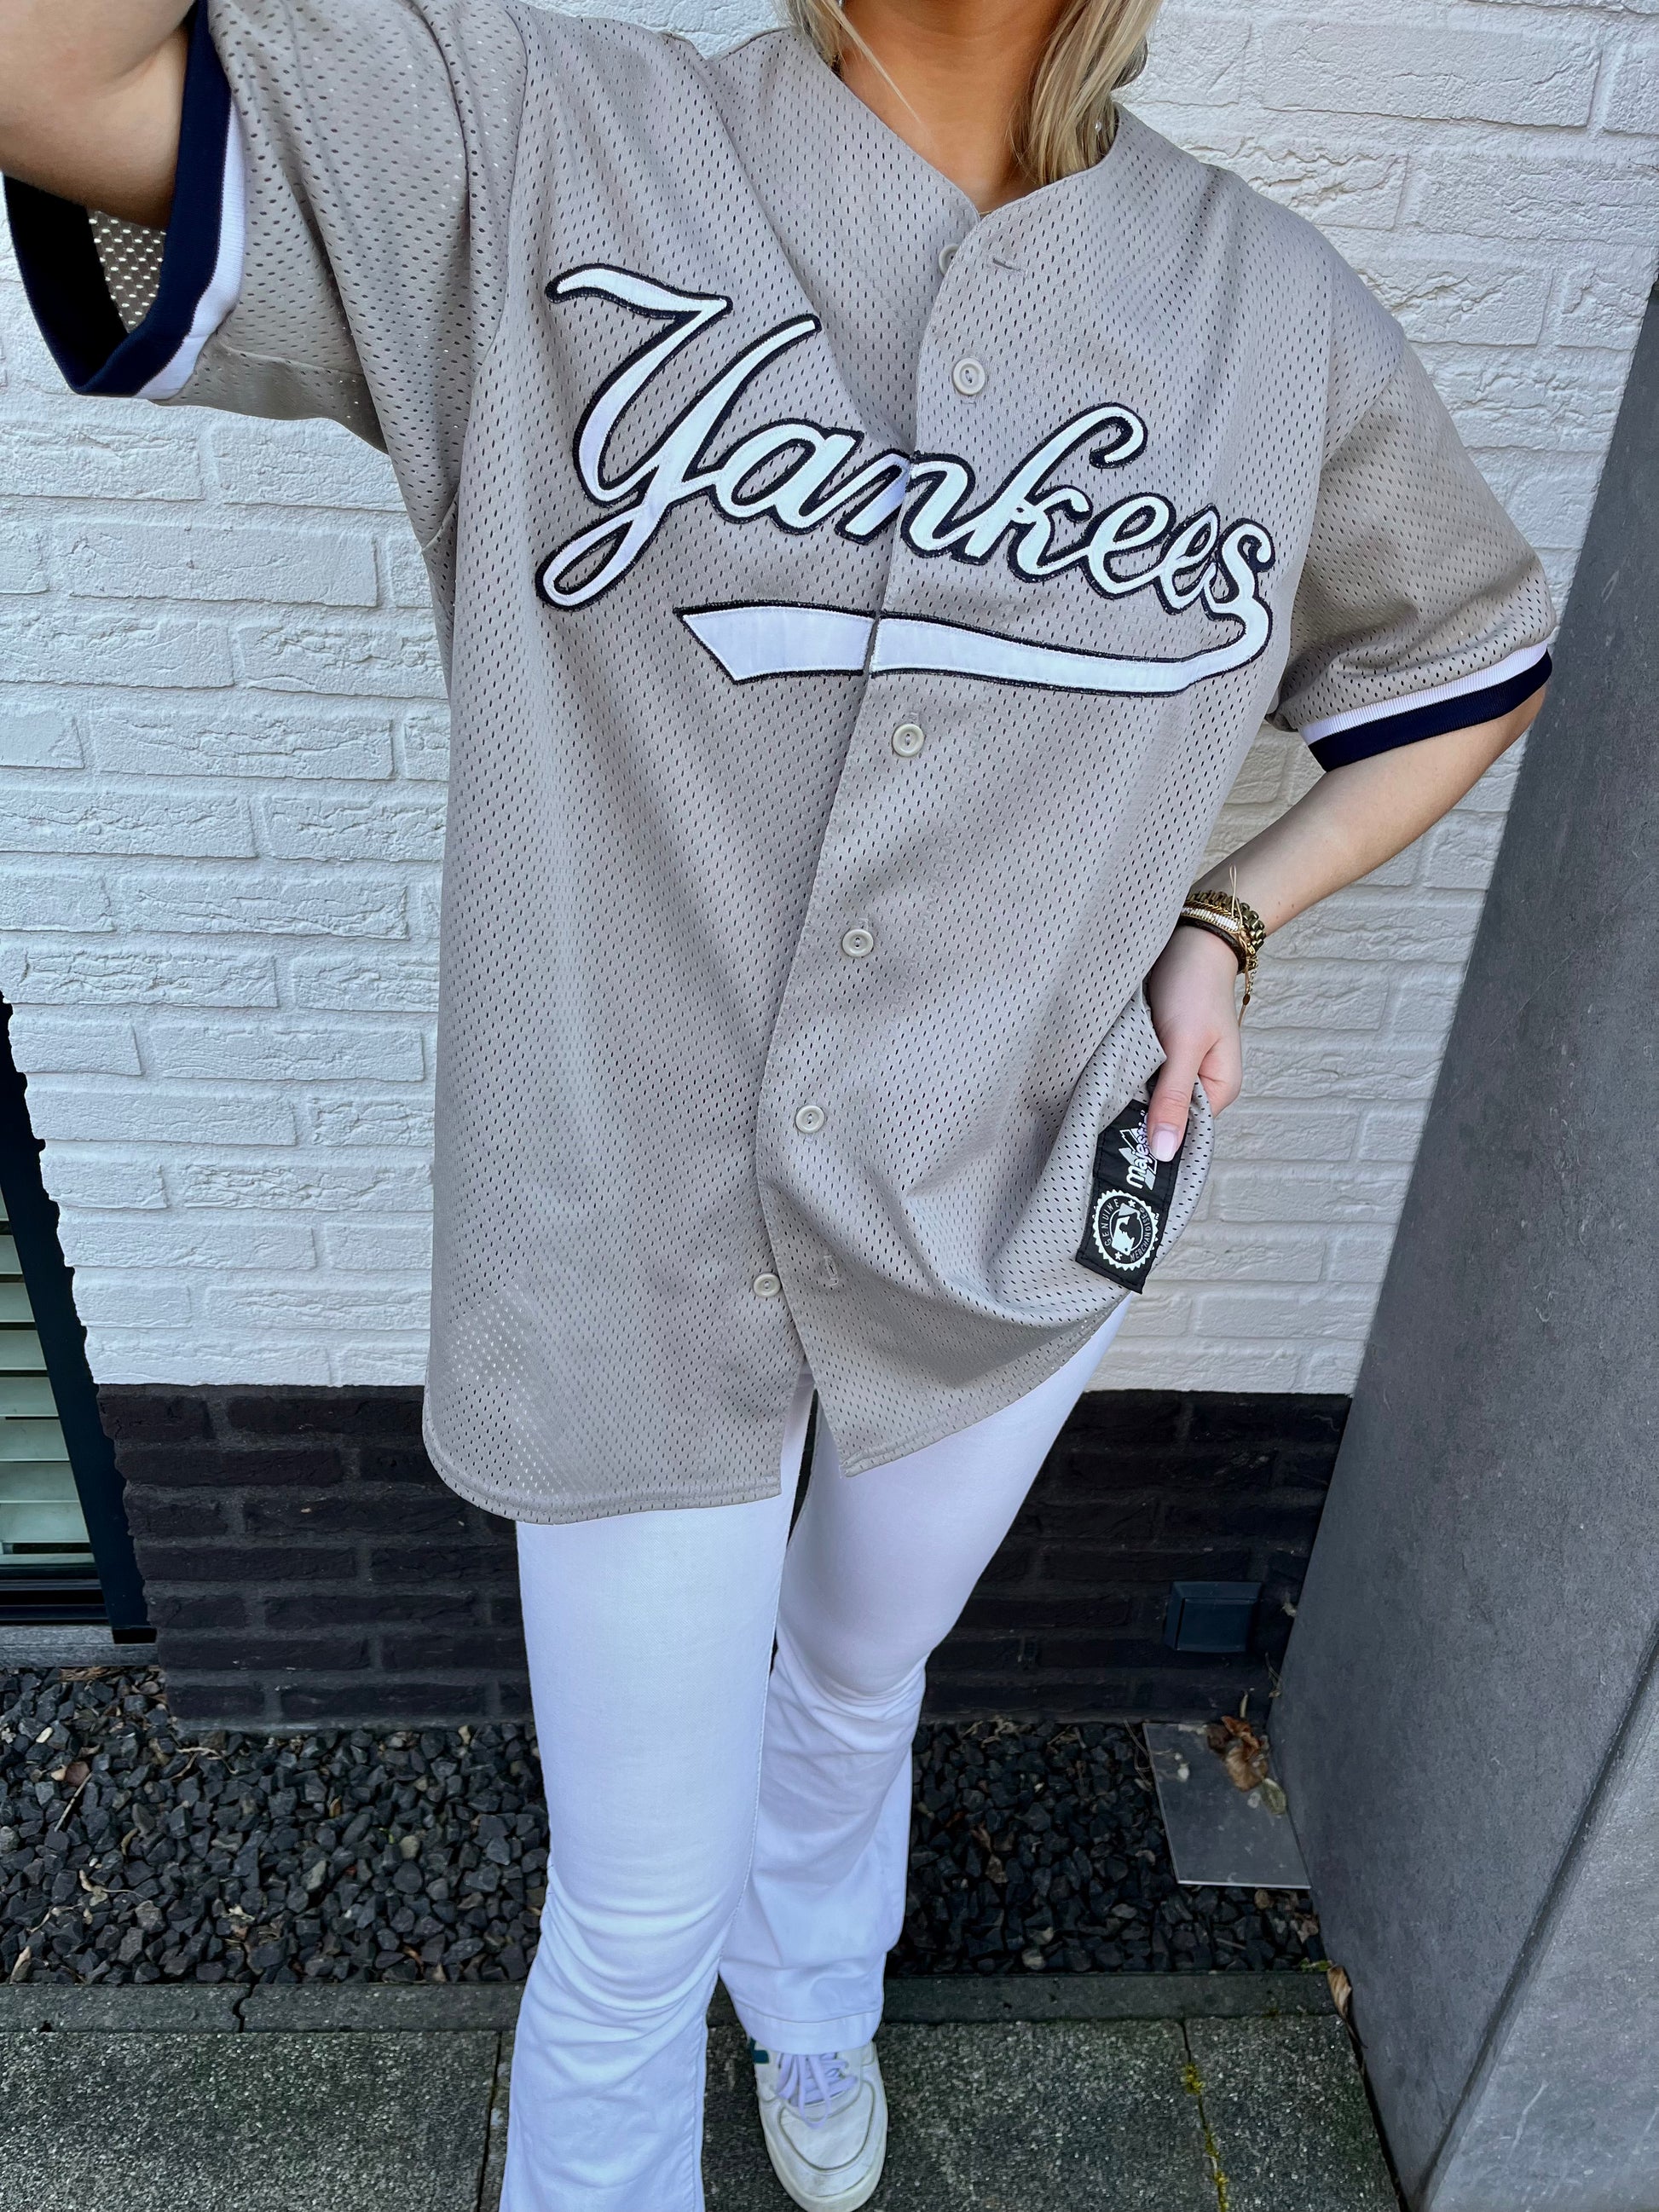 Yankees All-Star Game Baseball Jersey - Ellieshirt